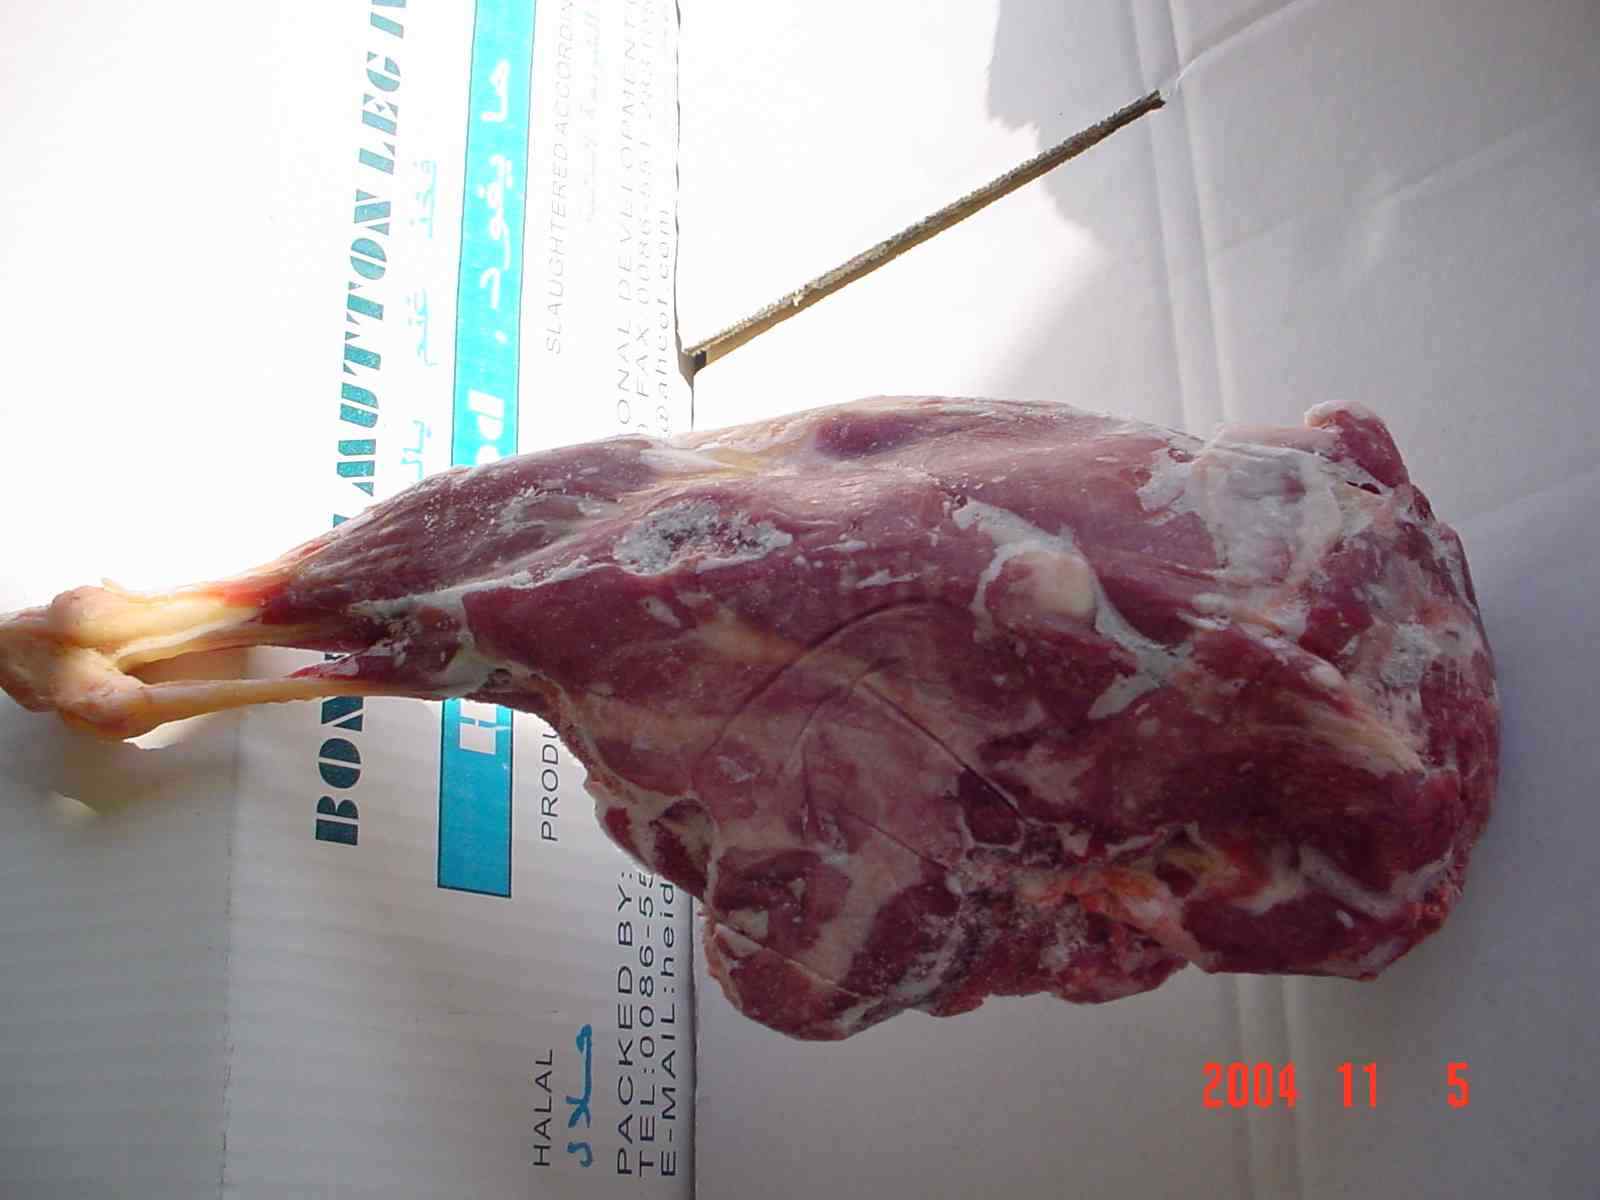  Bone In Mutton Hind Legs (Кость В Баранина Задние ноги)